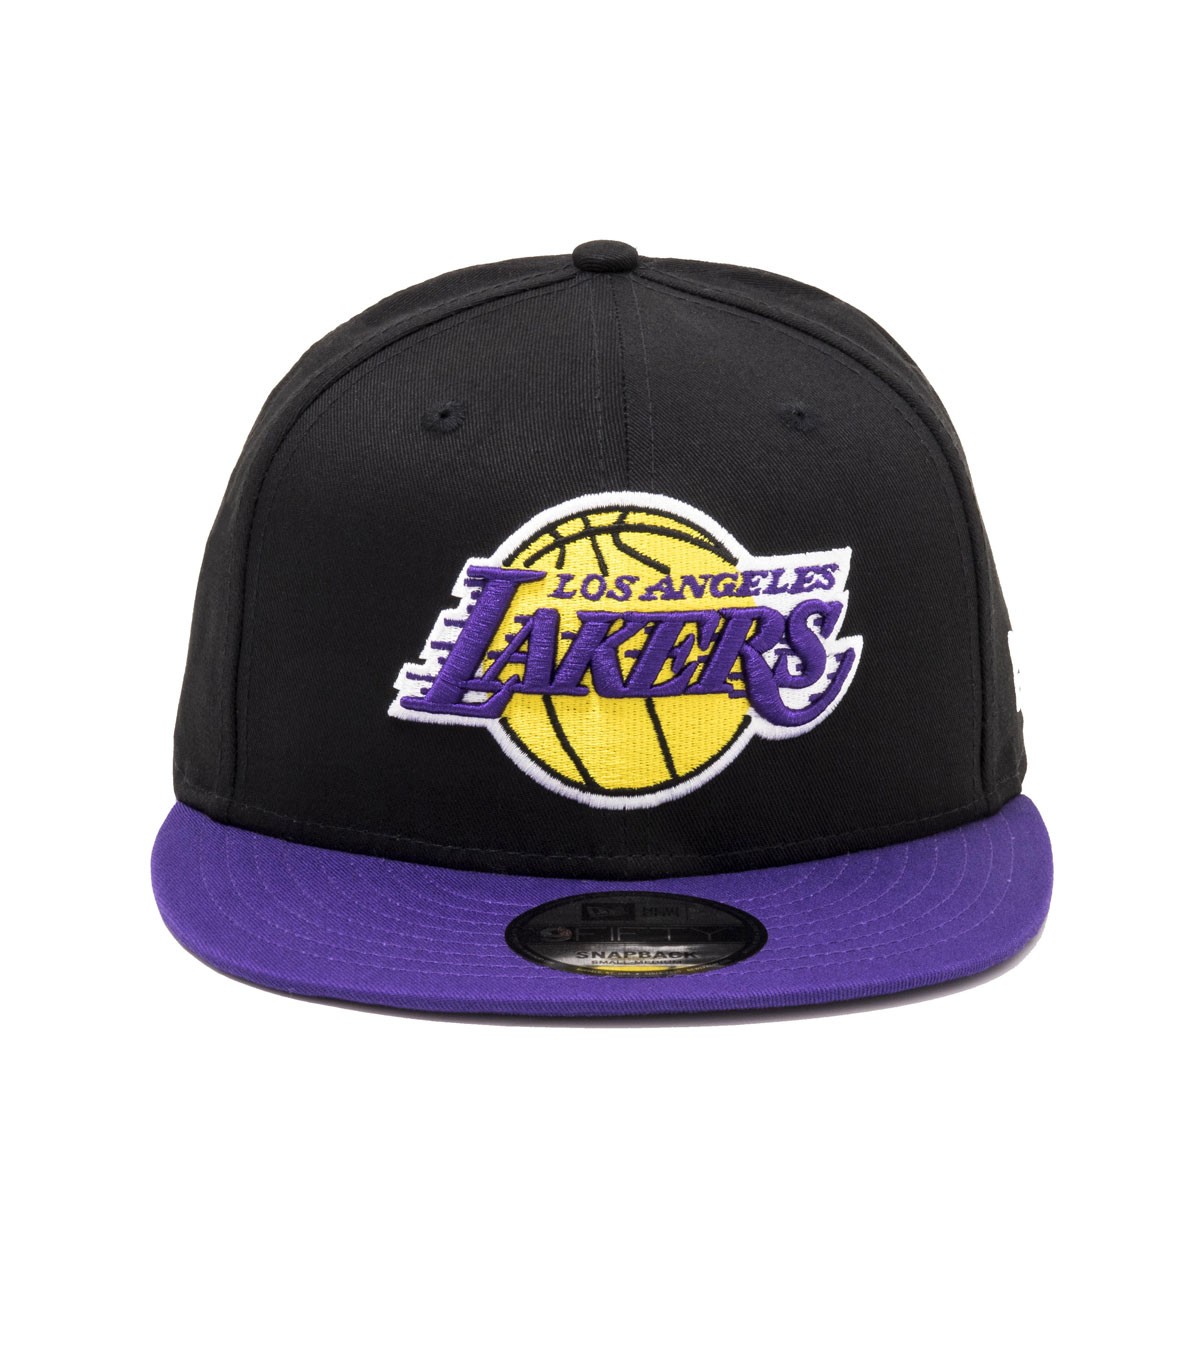 New Era - Gorra Los Angeles Lakers - Negro